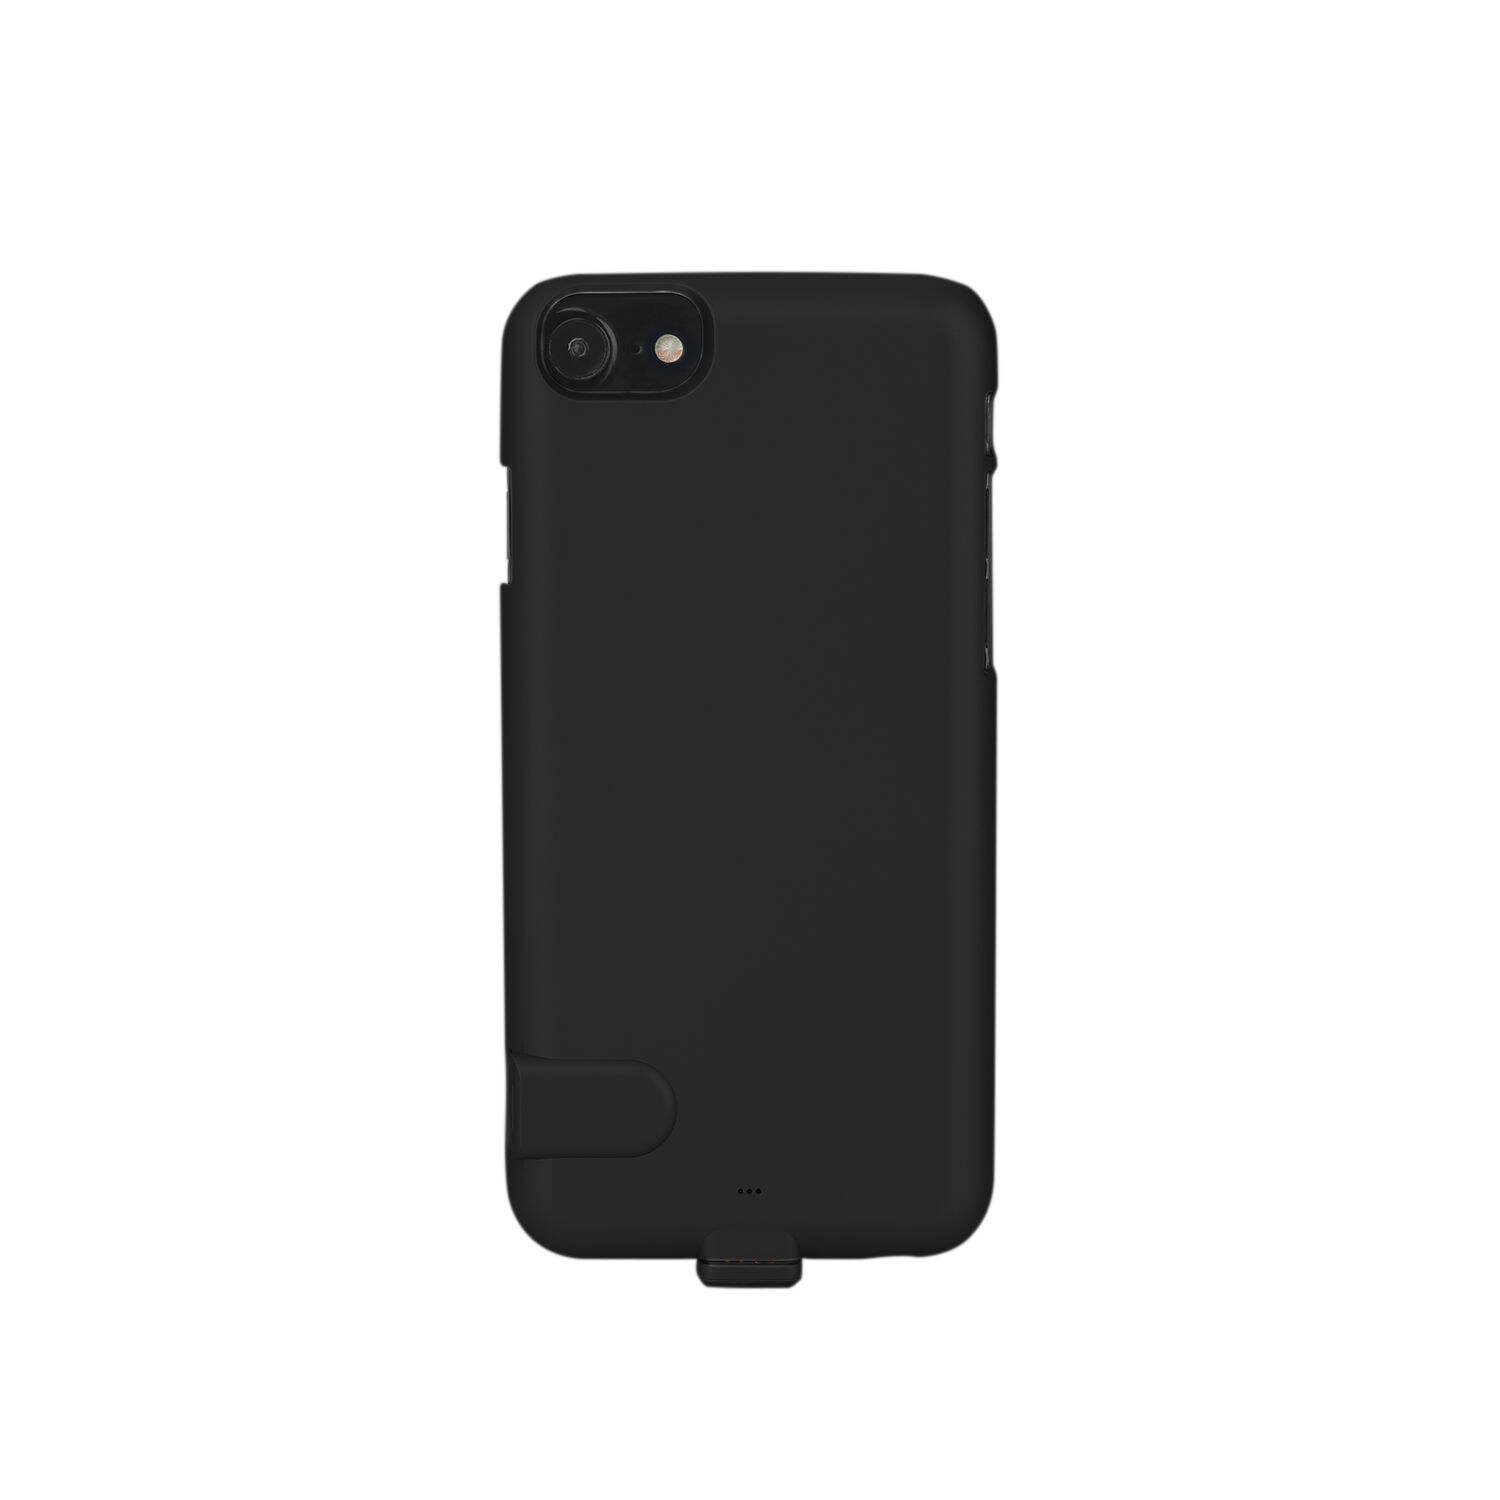 Akun kuori / Akkukotelo iPhone 7 Plus - Musta